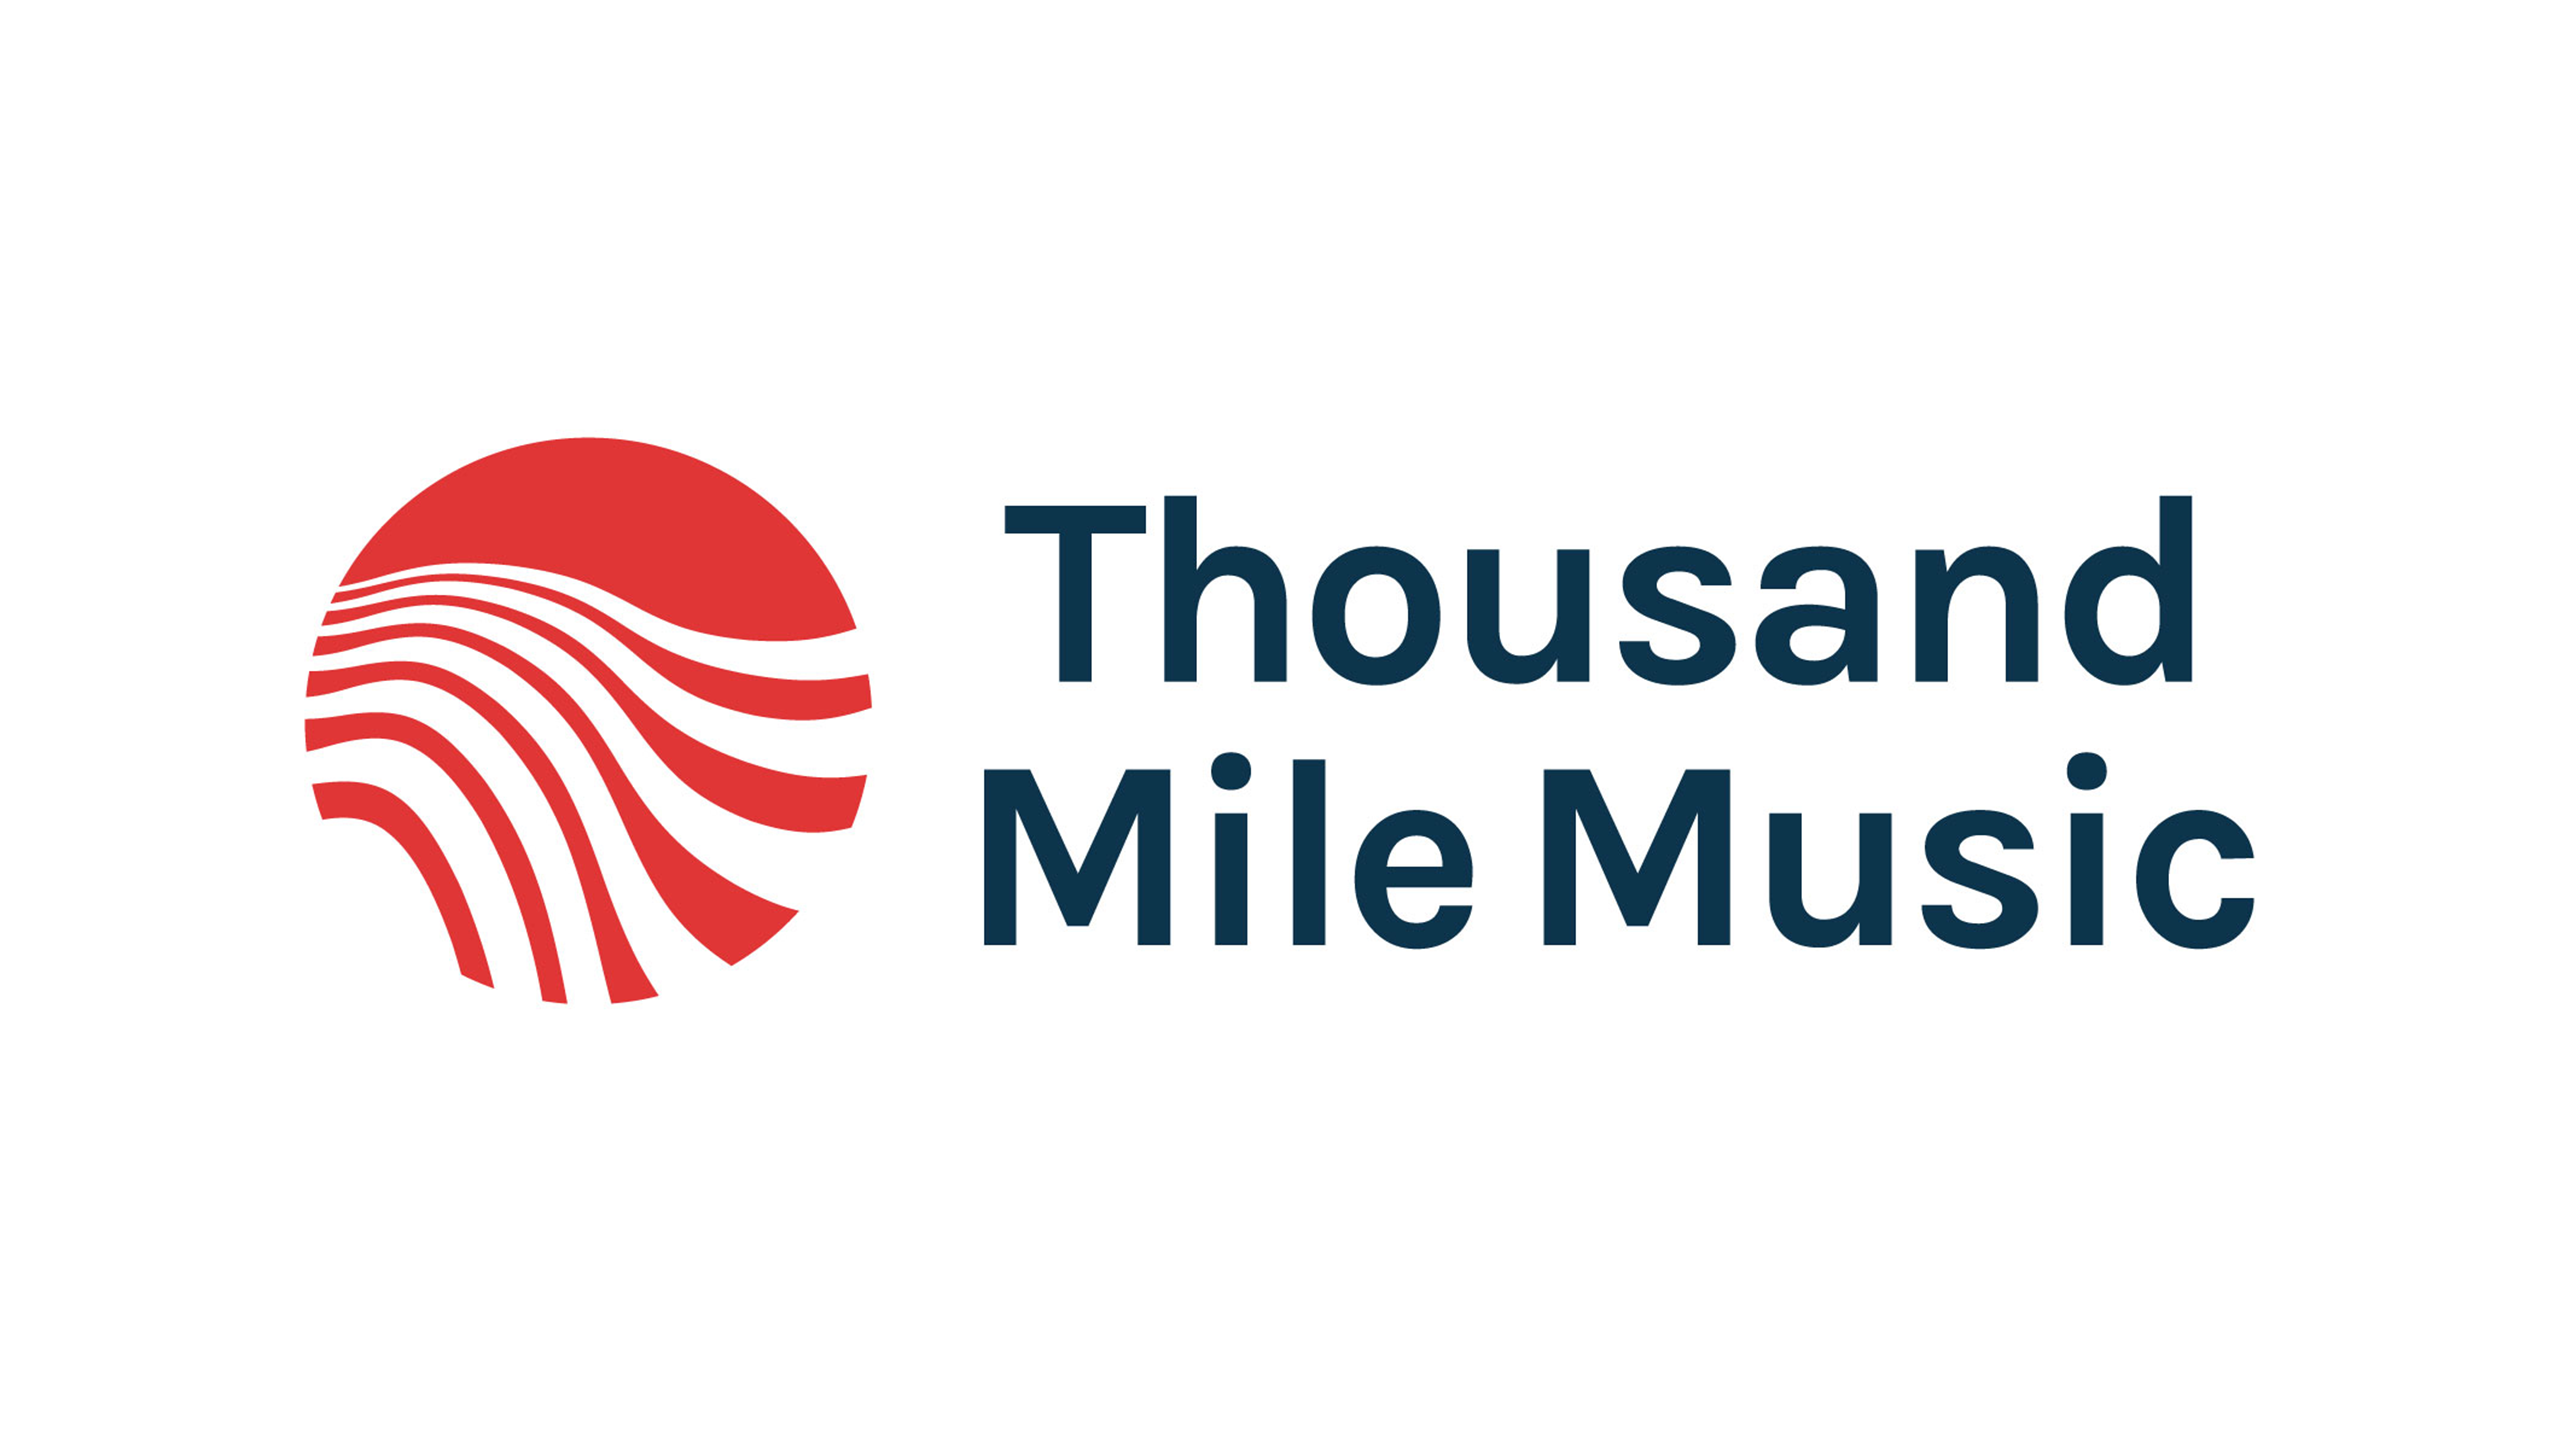 Thousand Mile Music logo